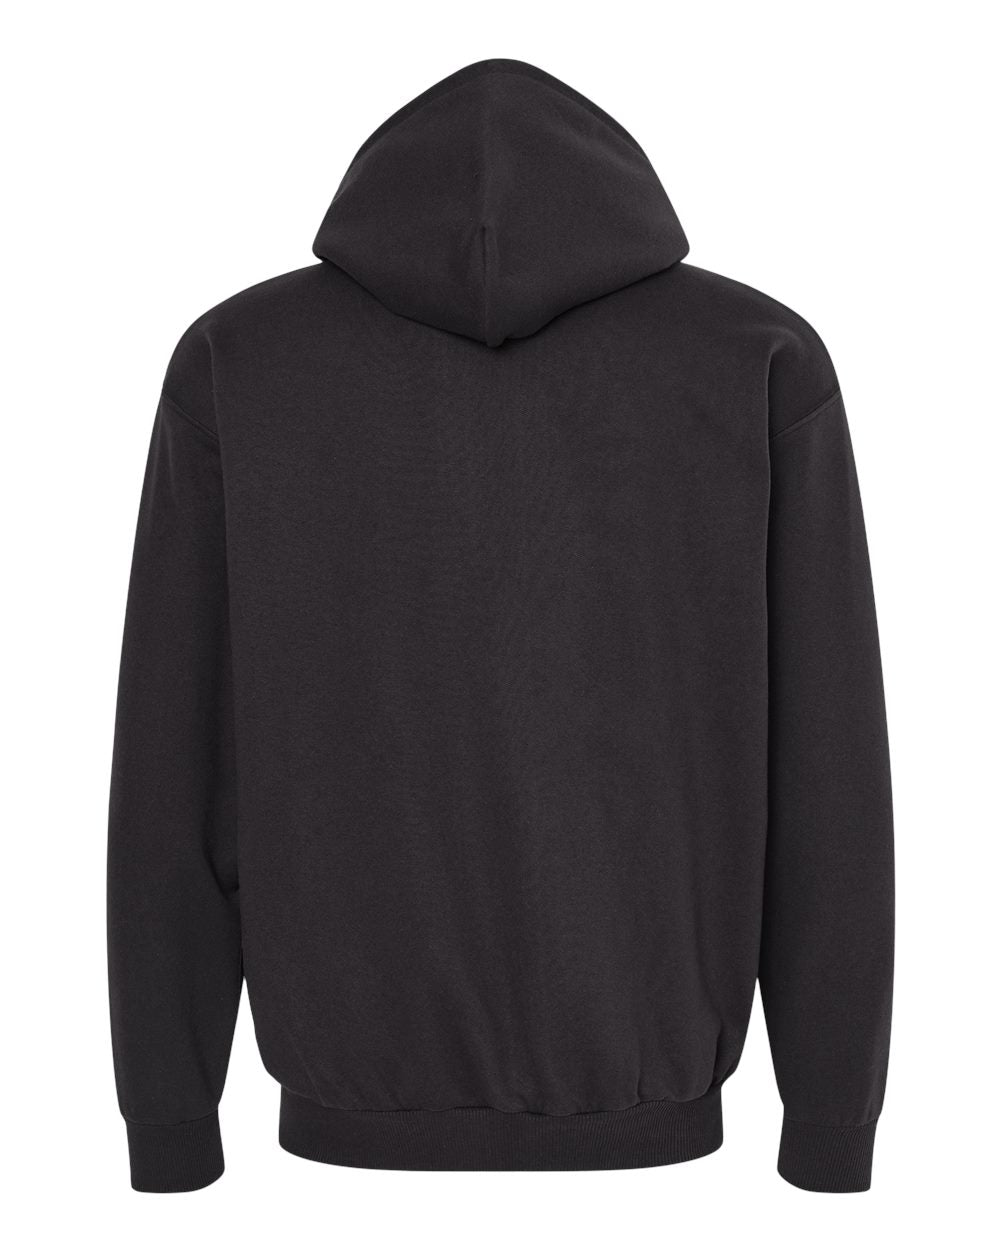 King Fashion Full-Zip Hooded Sweatshirt KF9017 #color_Black